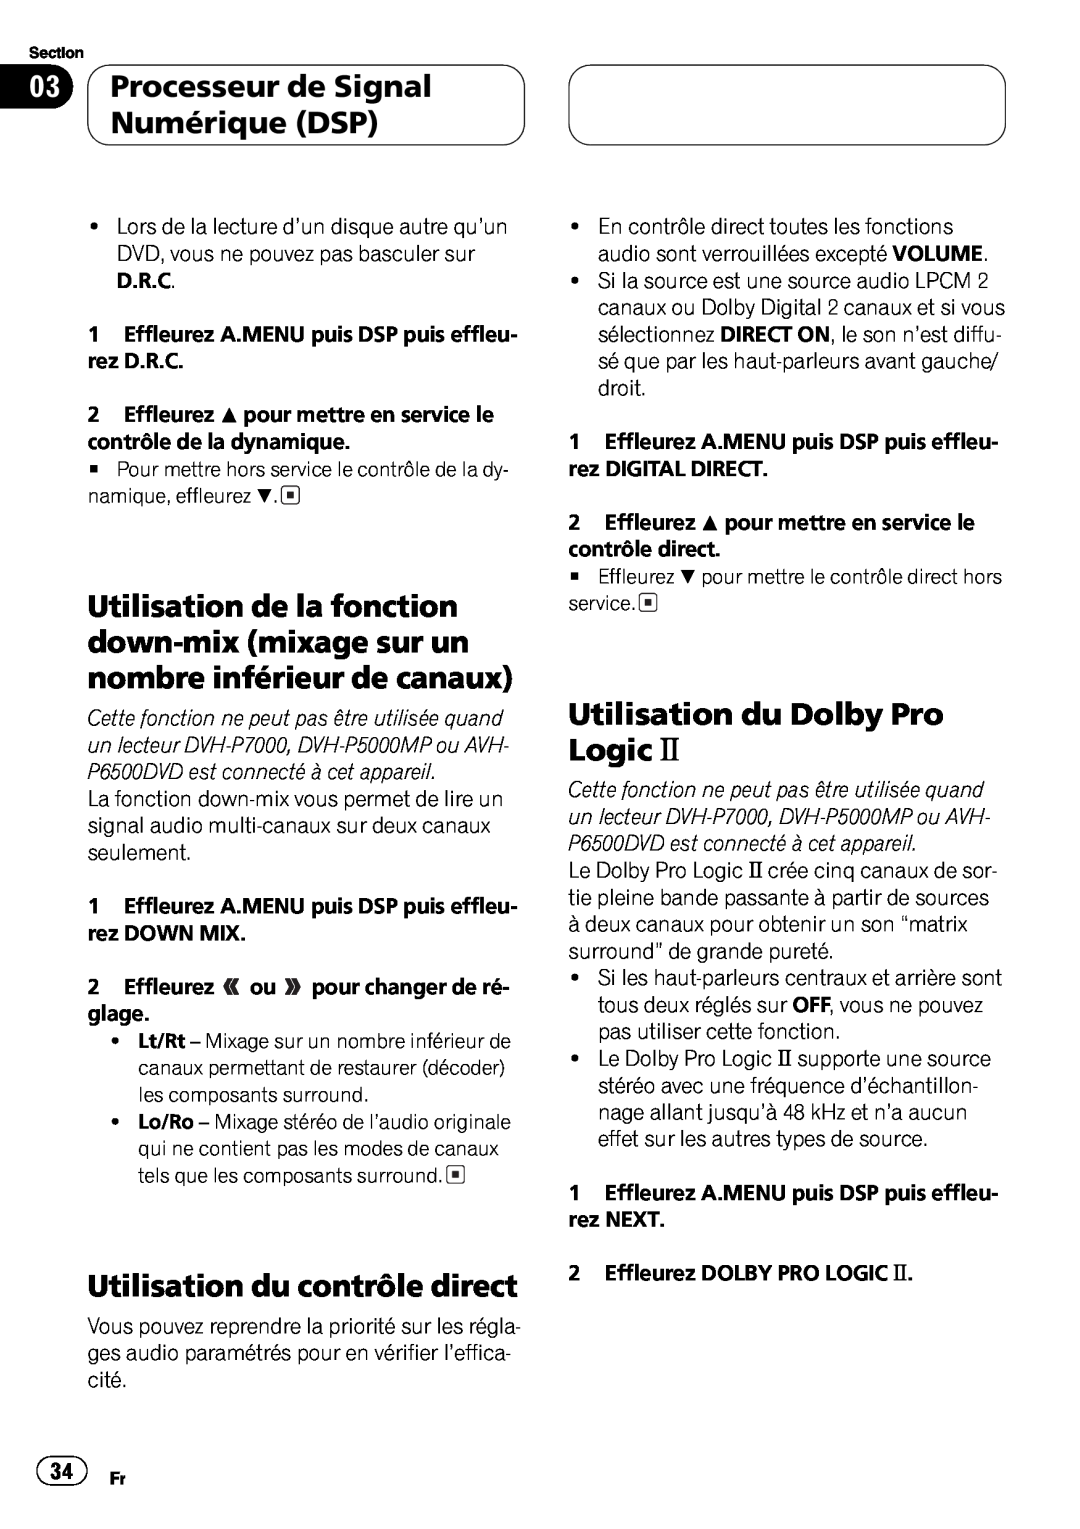 Pioneer DEQ-P8000 operation manual 